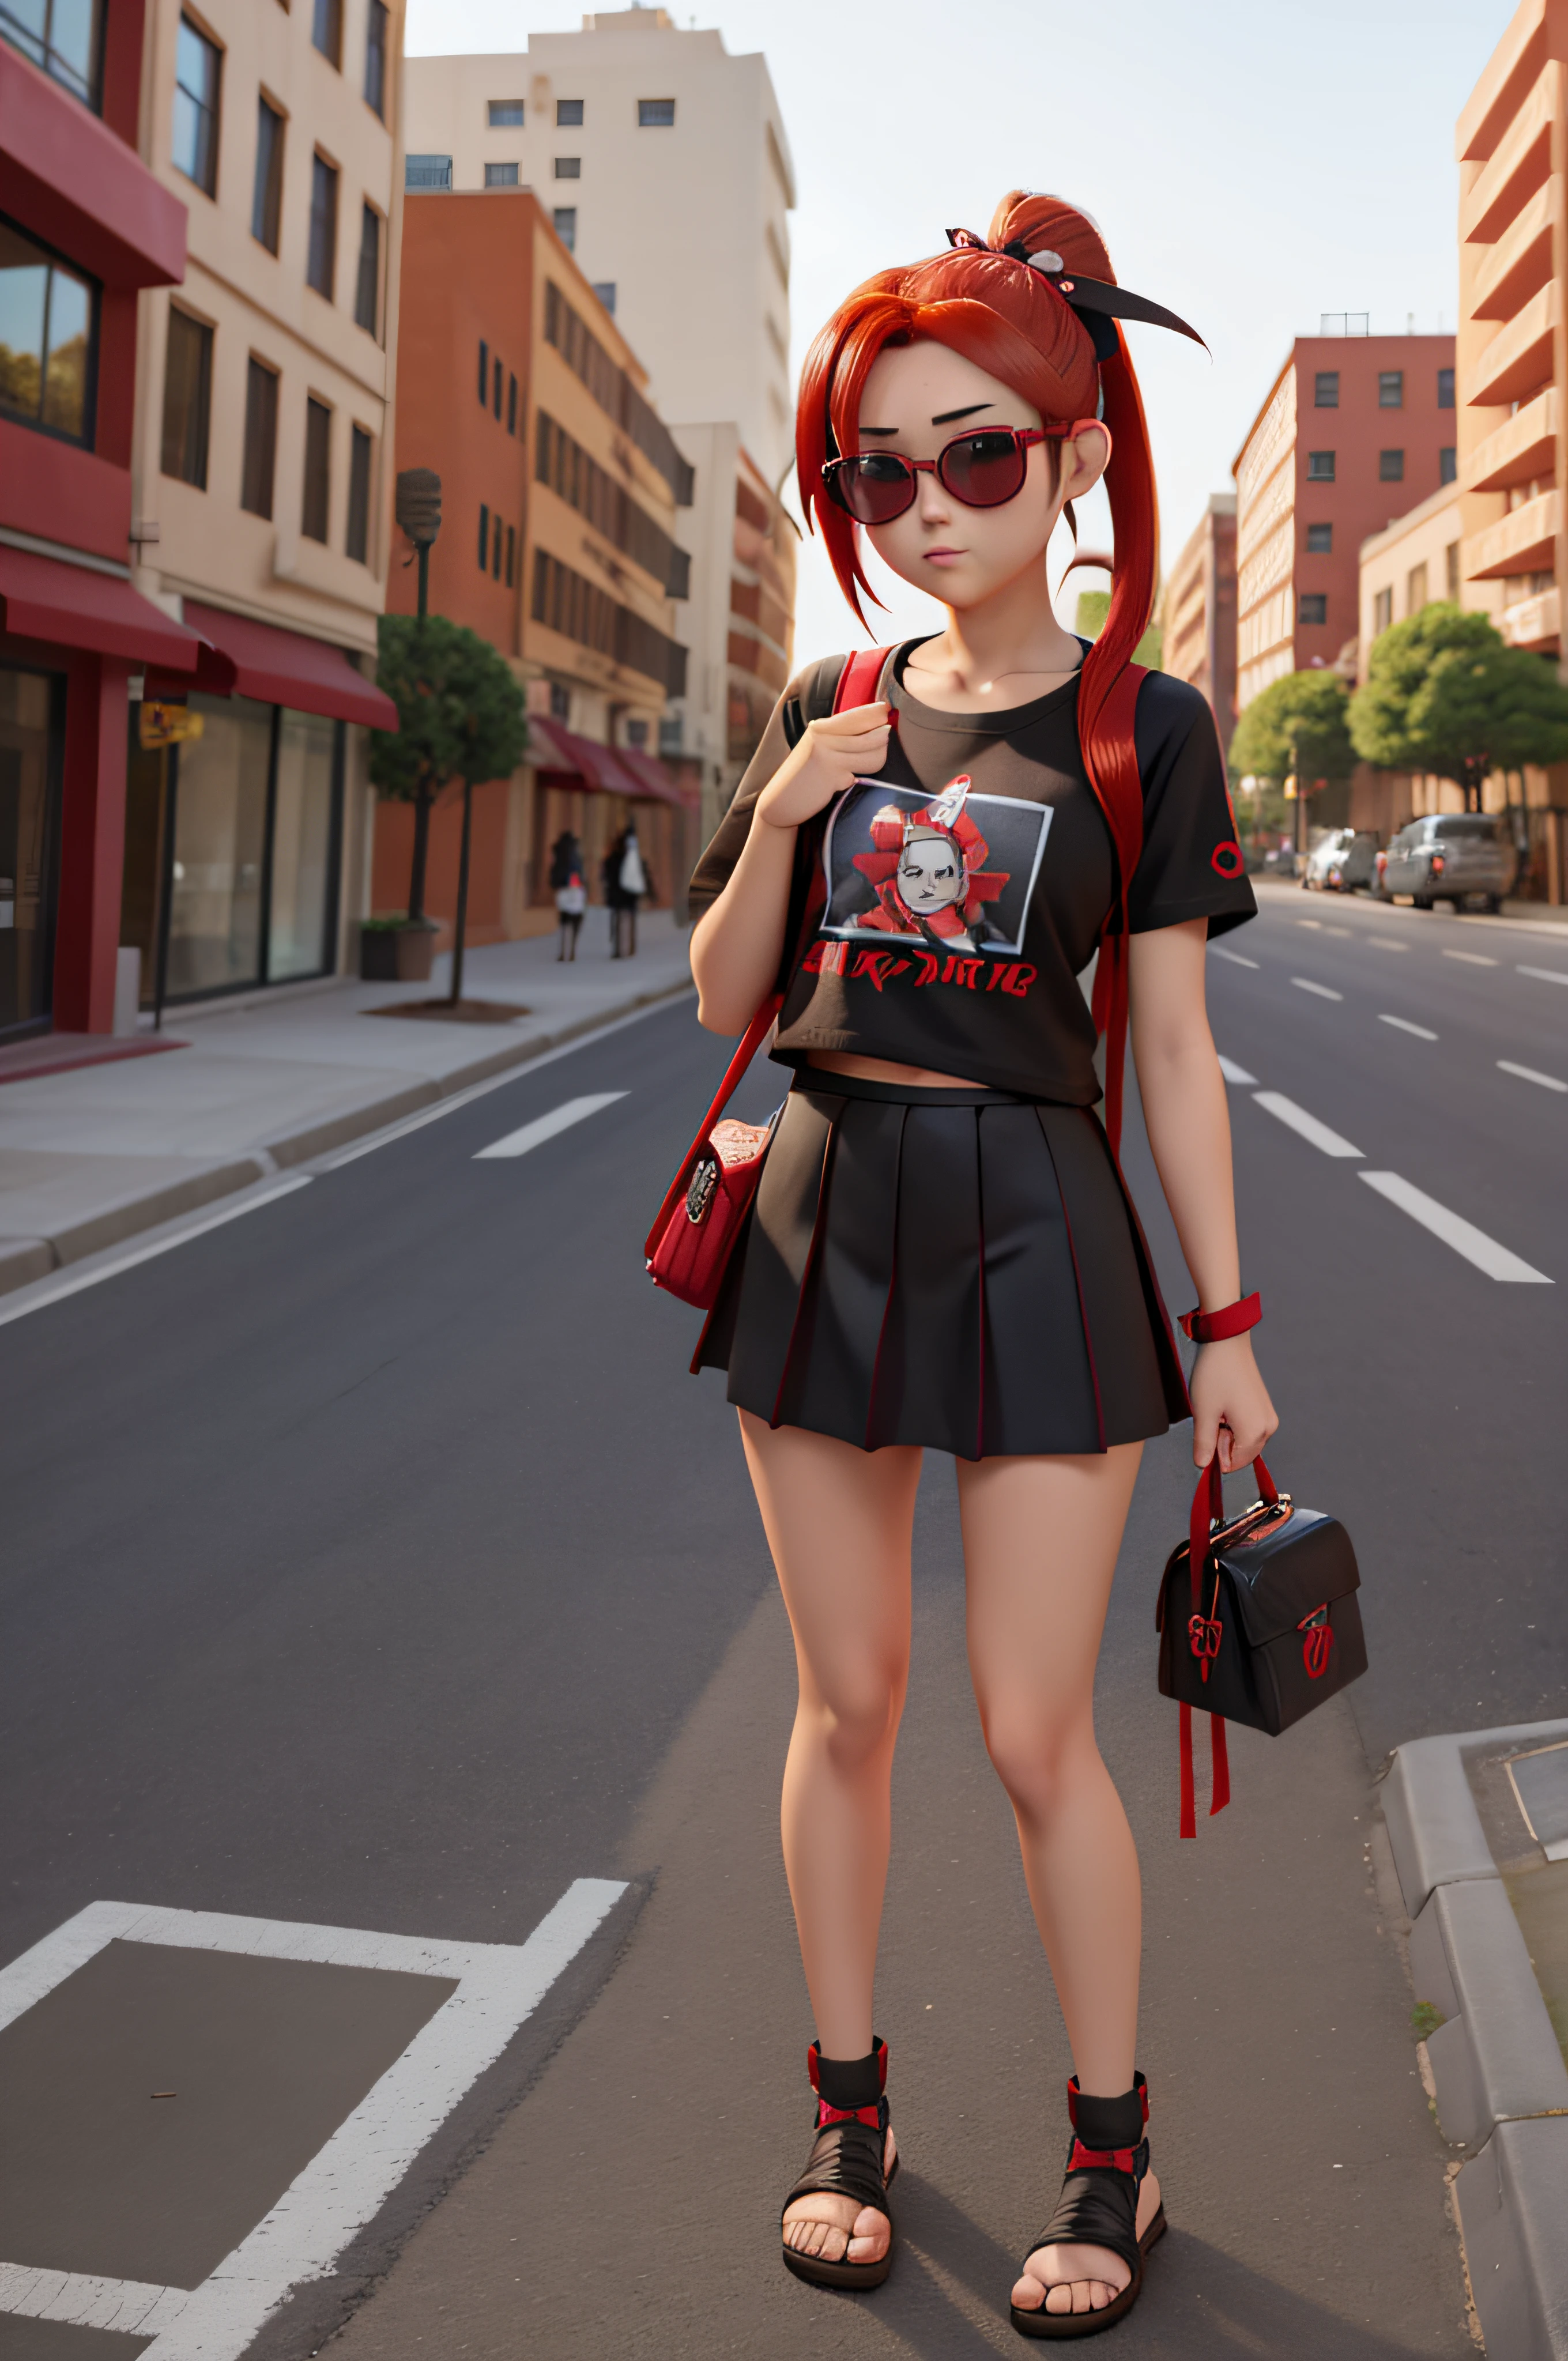 1 girl, 20 years old, red hair tied up, naruto akatsuki shirt, black mini skirt, colored ribbon in her hair, sunglasses, city